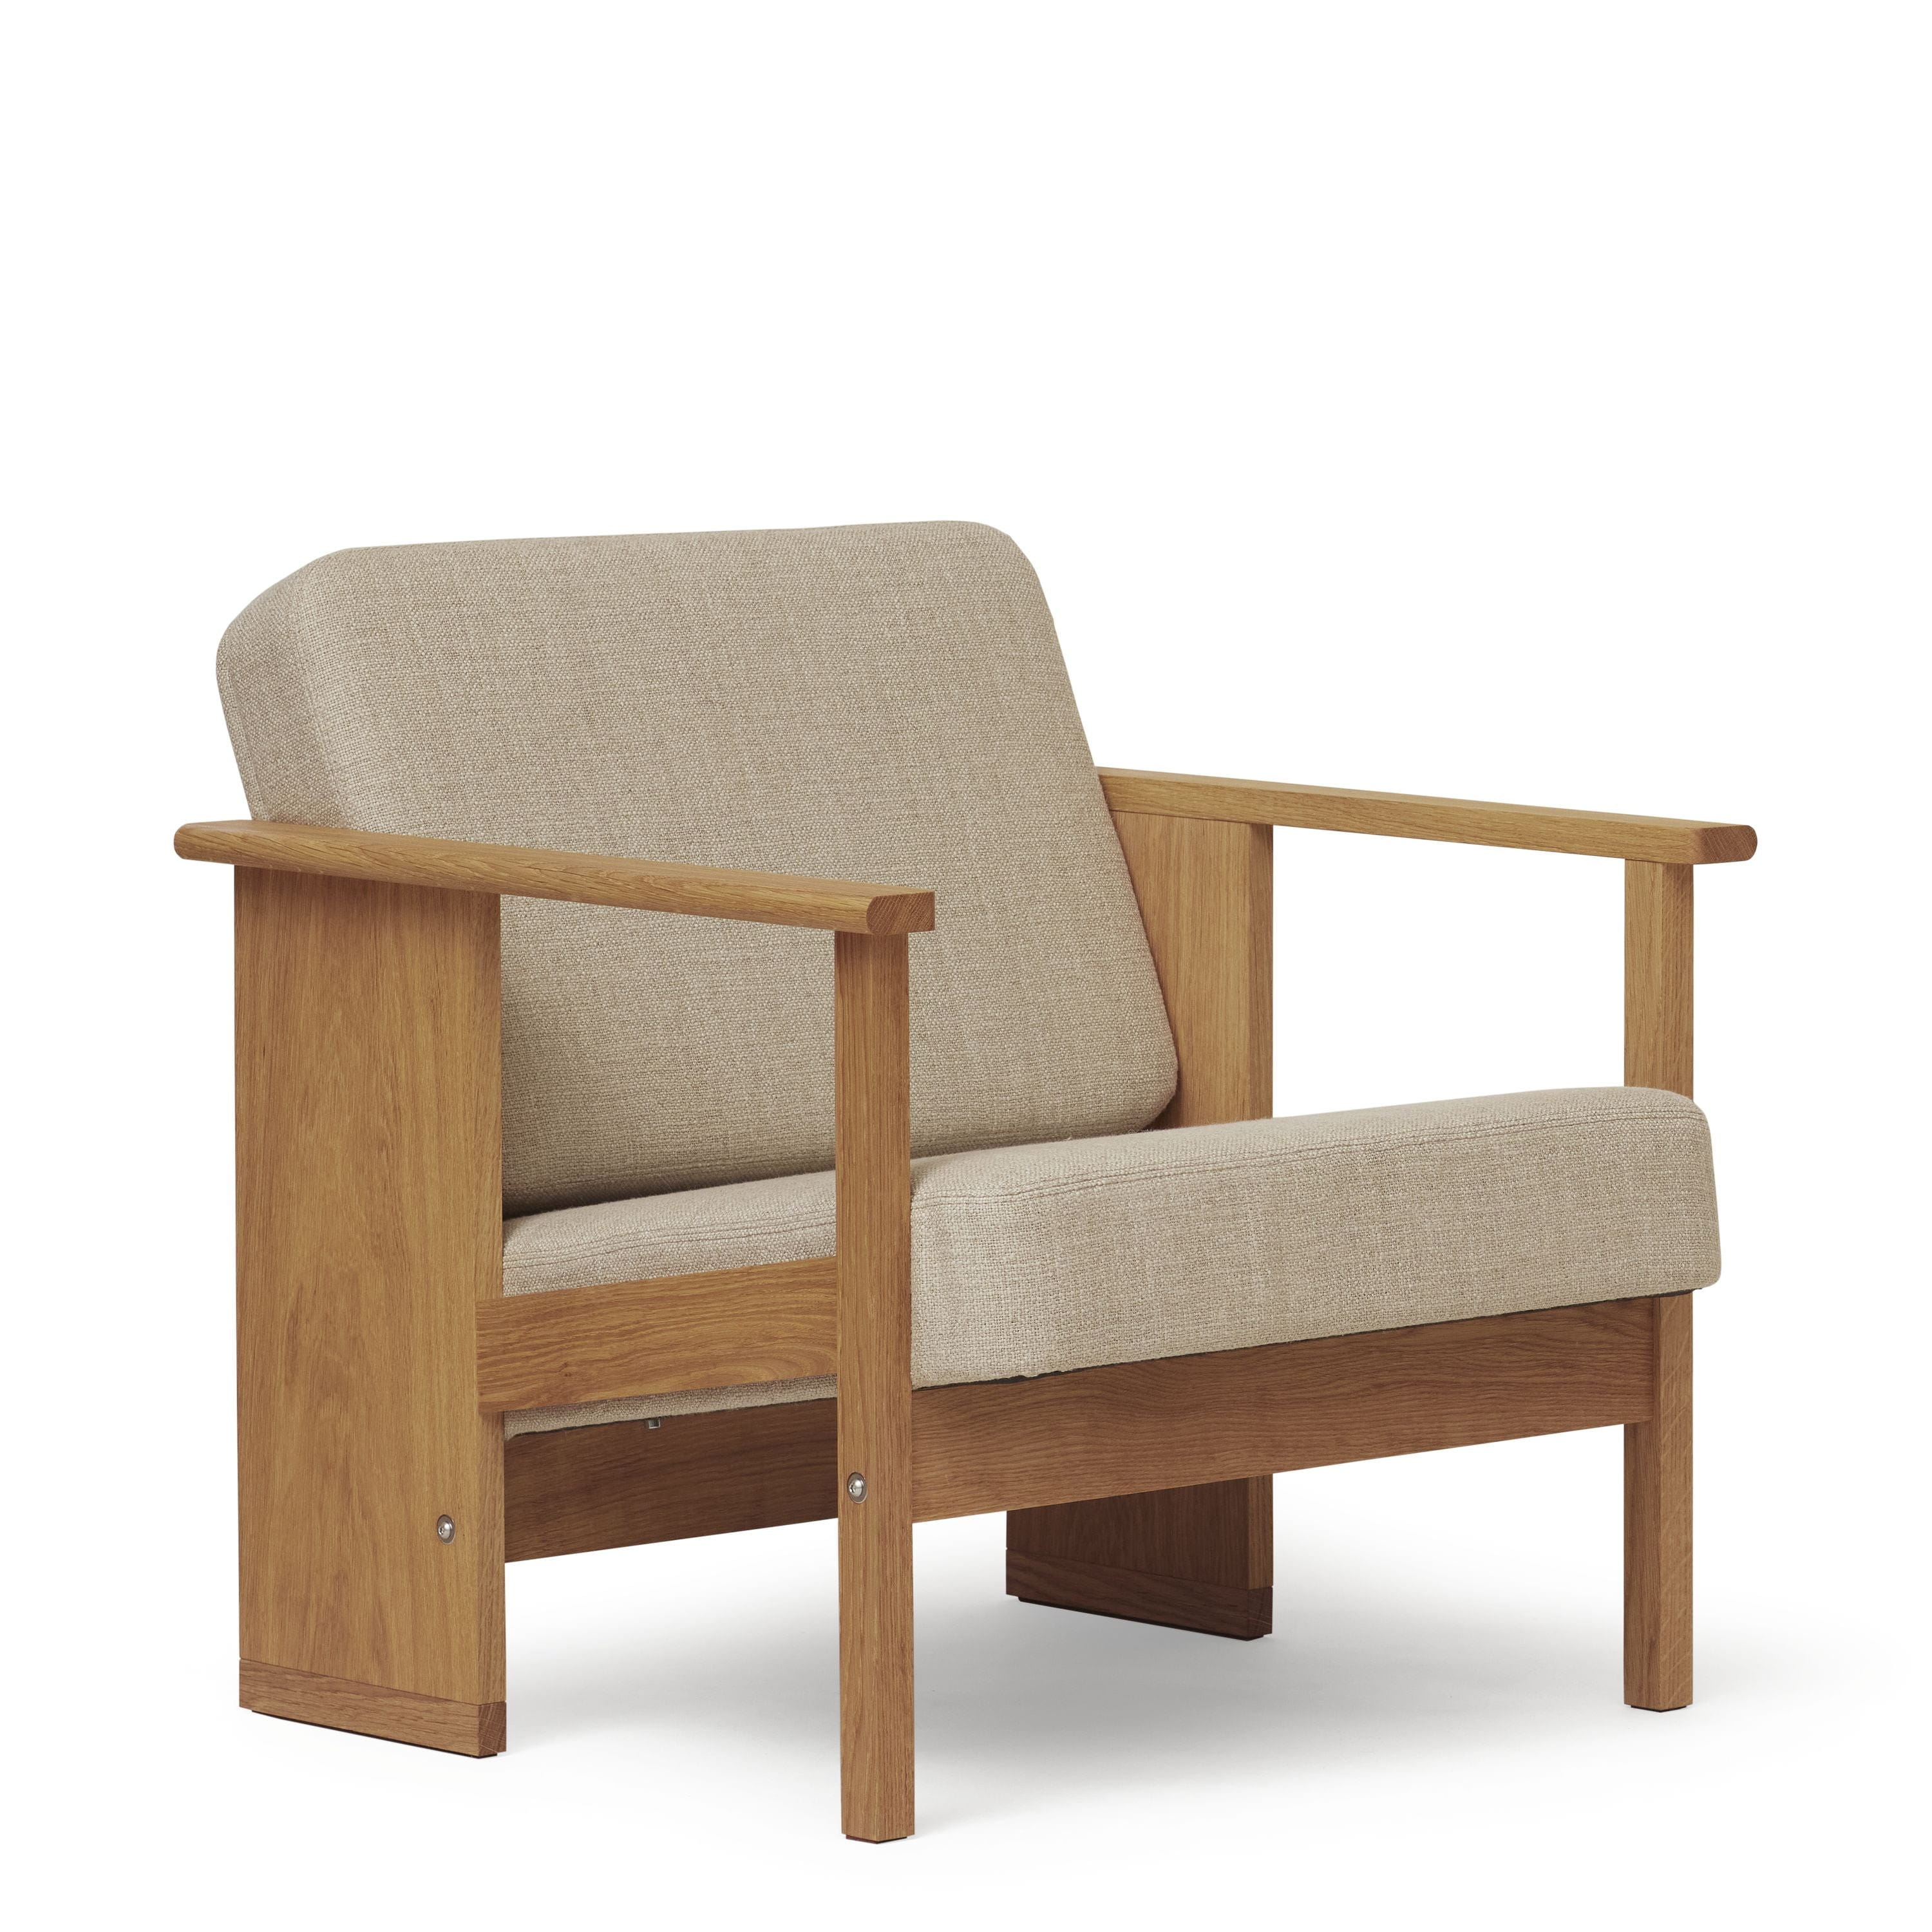 Form & Refine Block Lounge Chair. Eiche